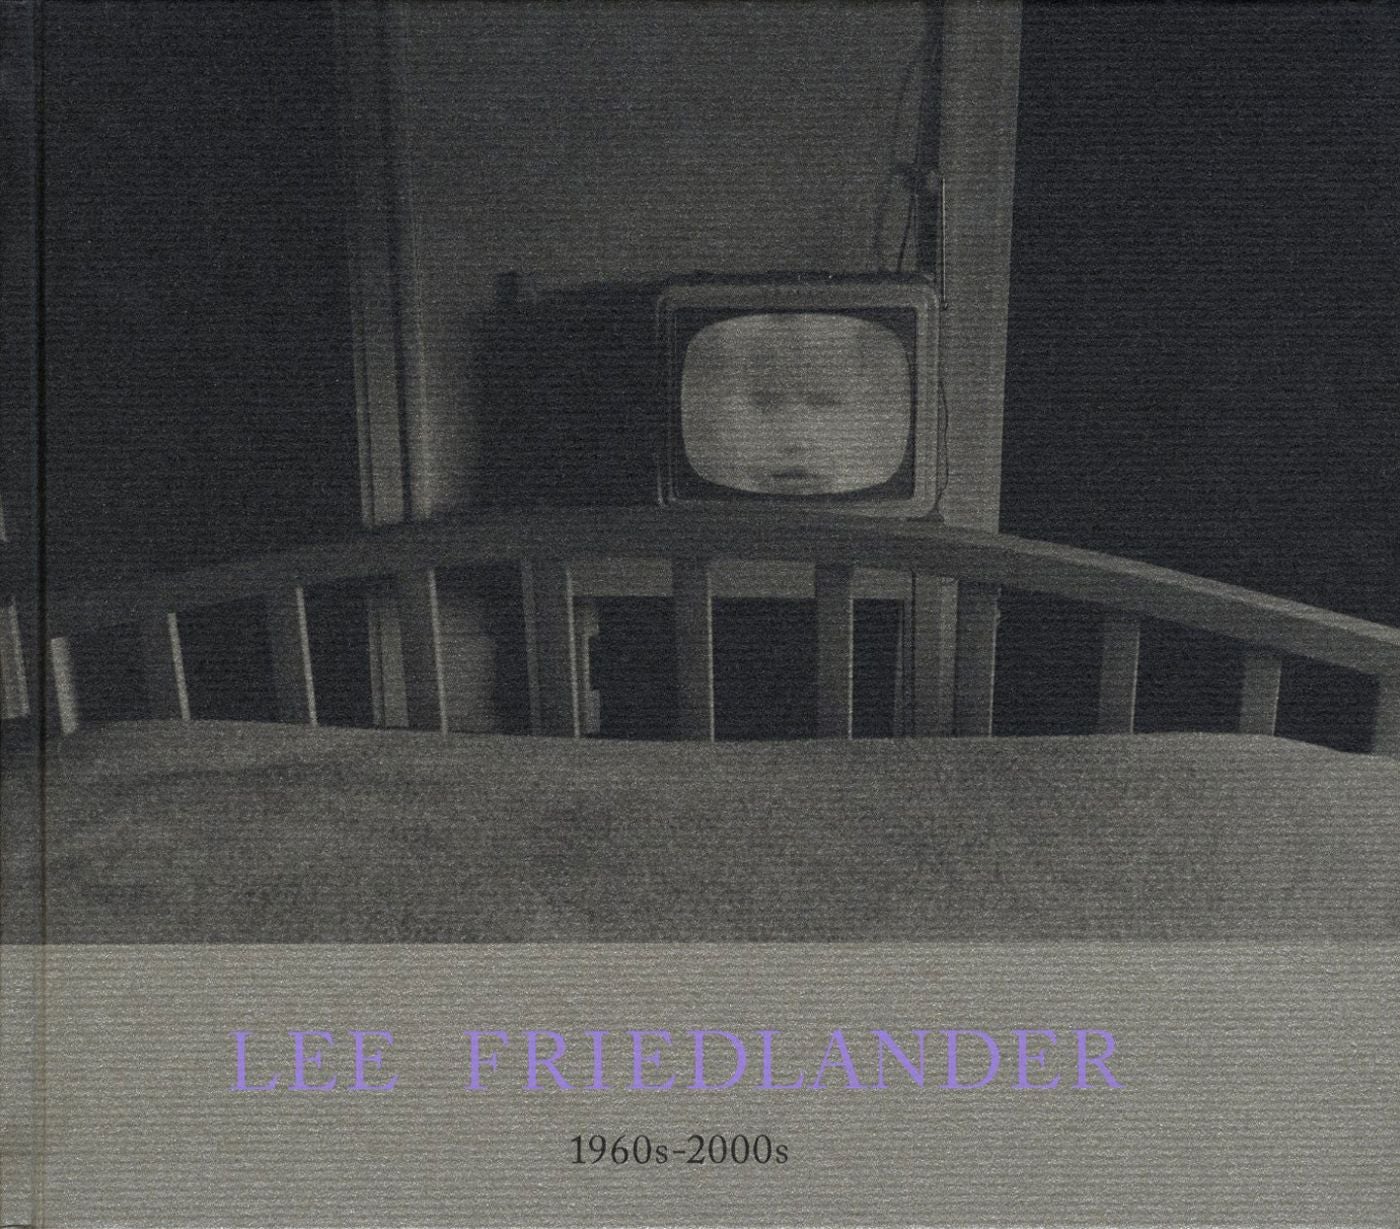 Lee Friedlander: 1960s - 2000s (Rat Hole Gallery)